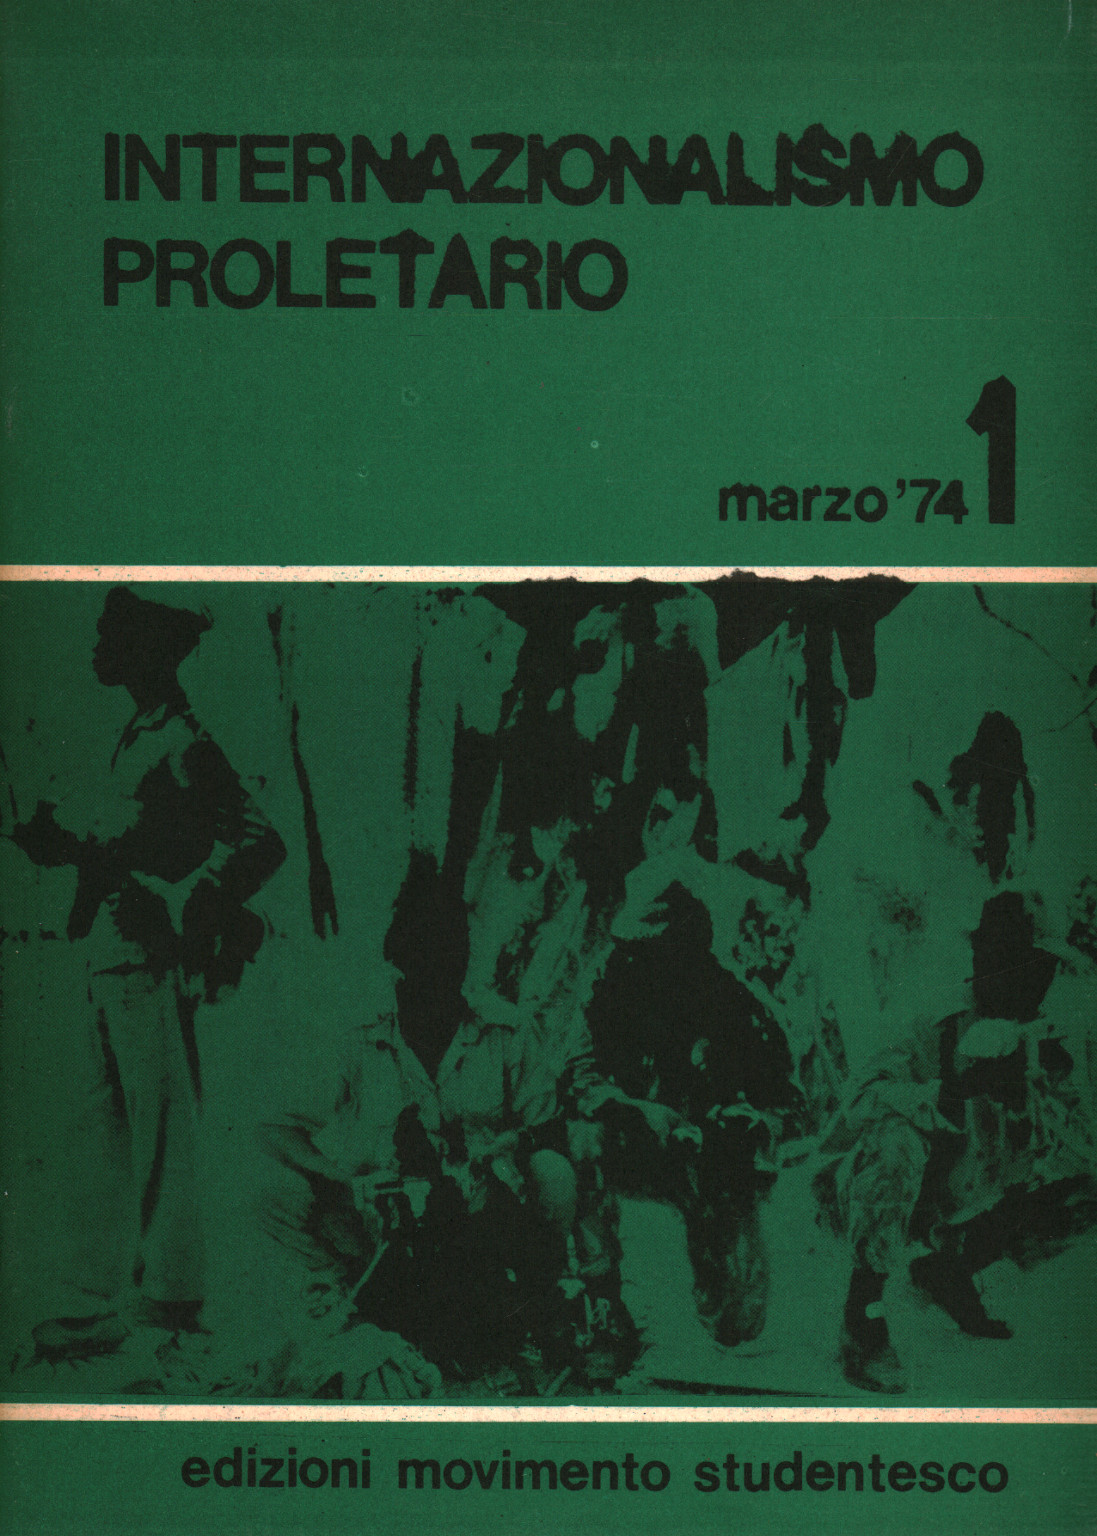 Iternazionalismo proletario marzo 1974 1, s.a.